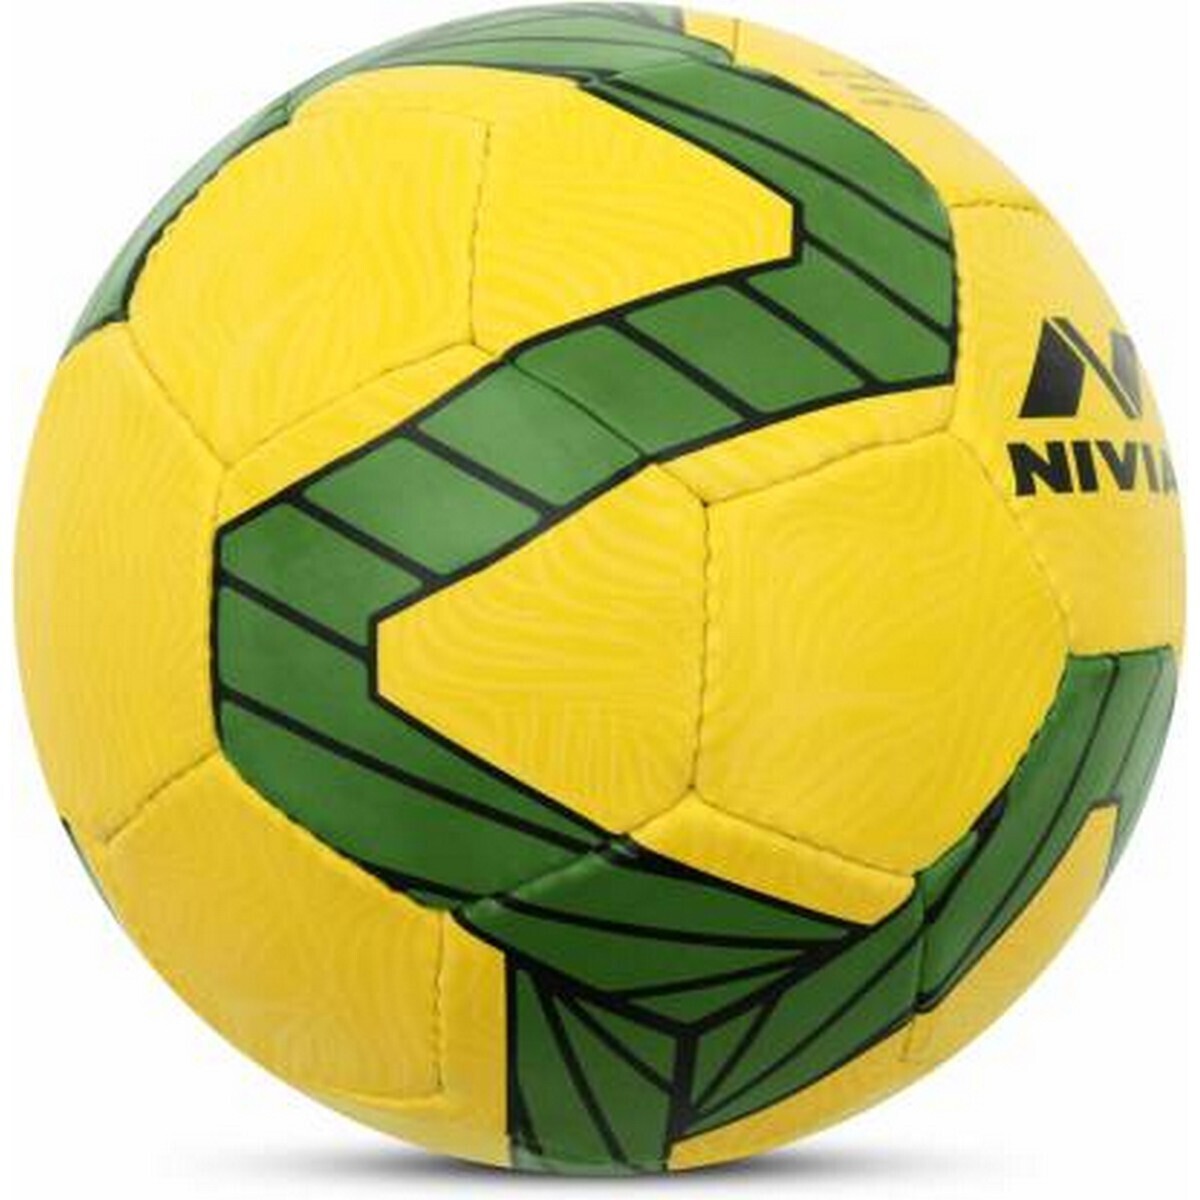 Nivia Kross Brazil FootBall 5 FB-469